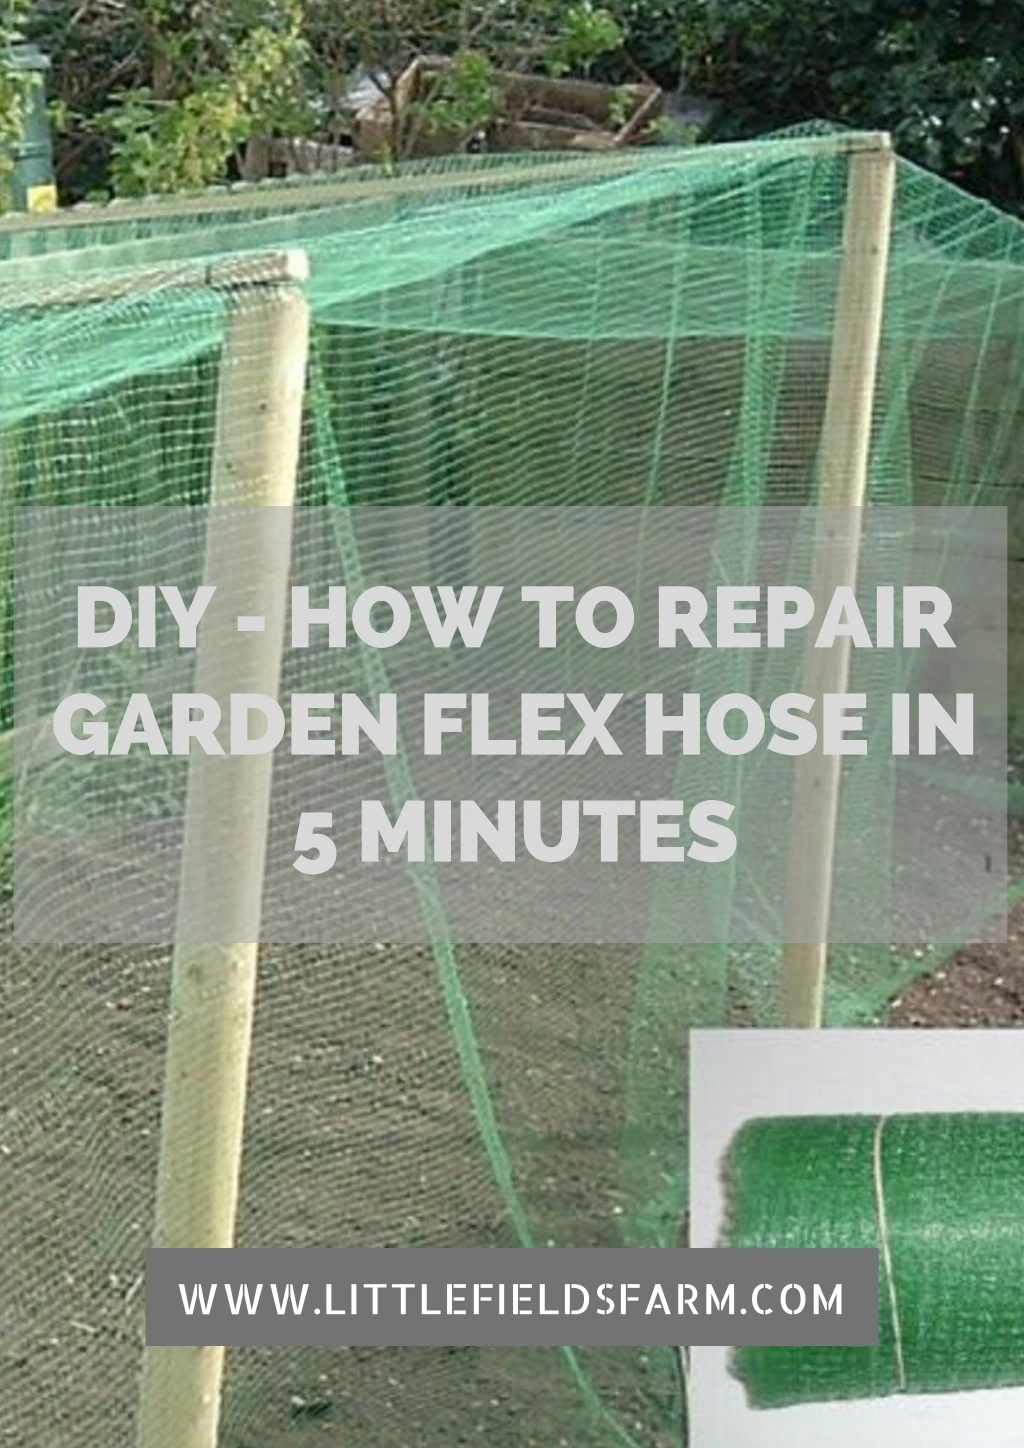 diy how to repair garden flex hose in 5 minutes